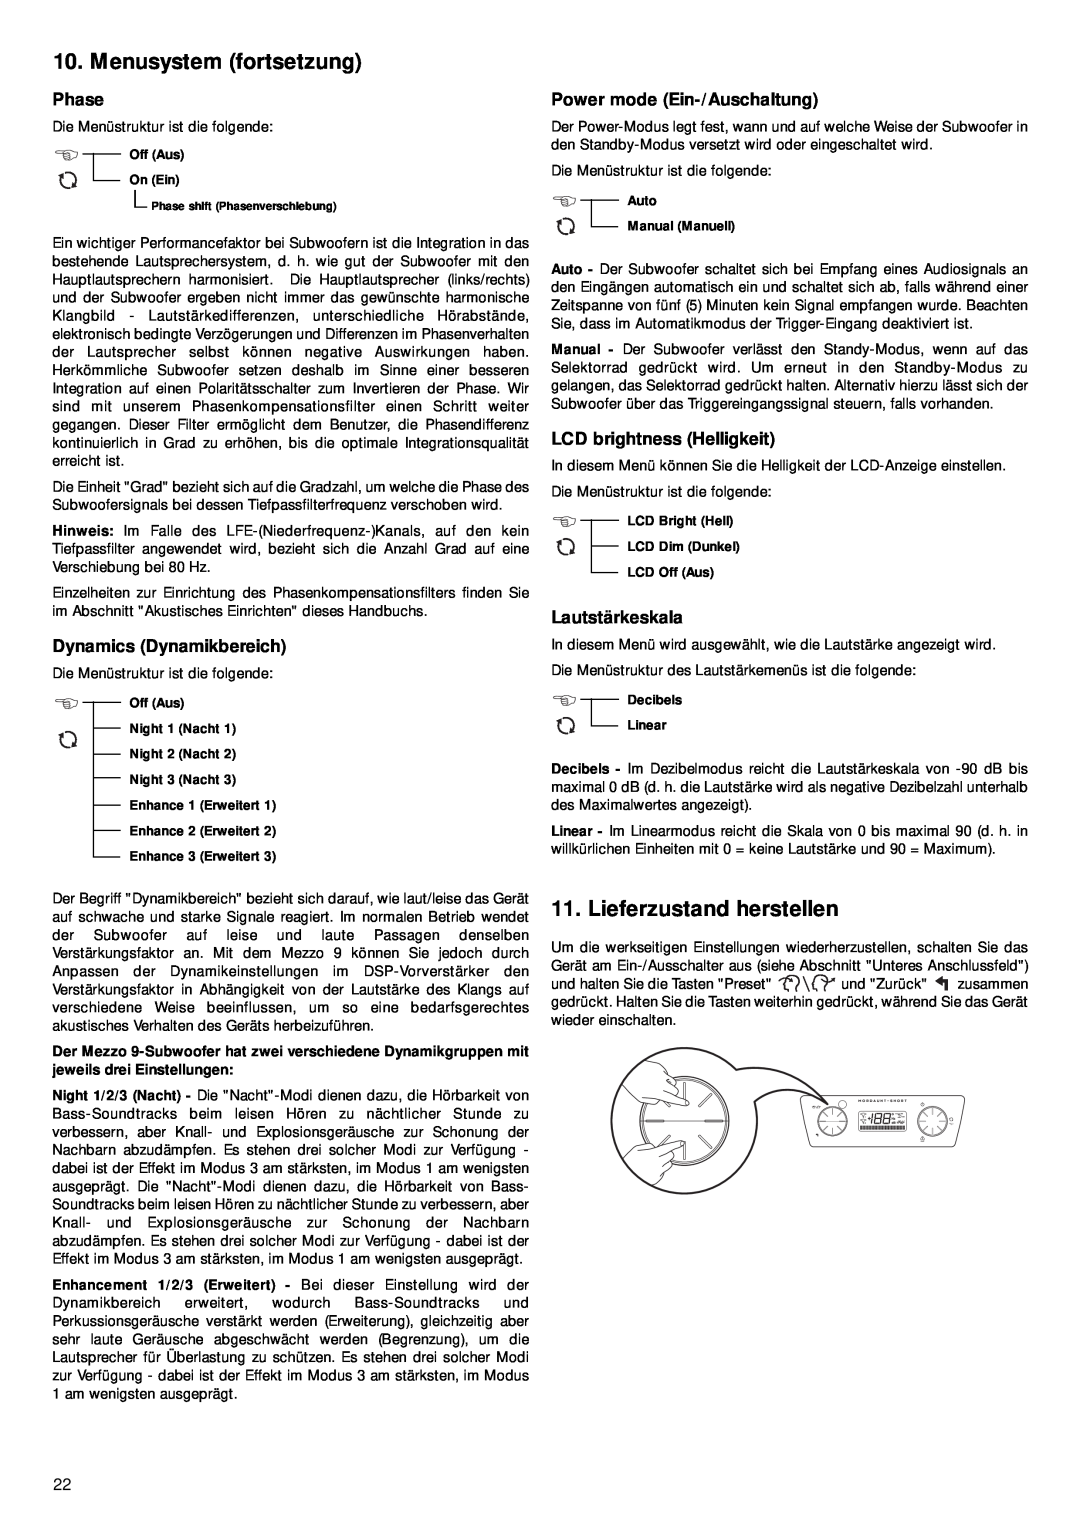 Mordaunt-Short 9 manual Menusystem fortsetzung, Lieferzustand herstellen, Phase, Dynamics Dynamikbereich, Lautstärkeskala 